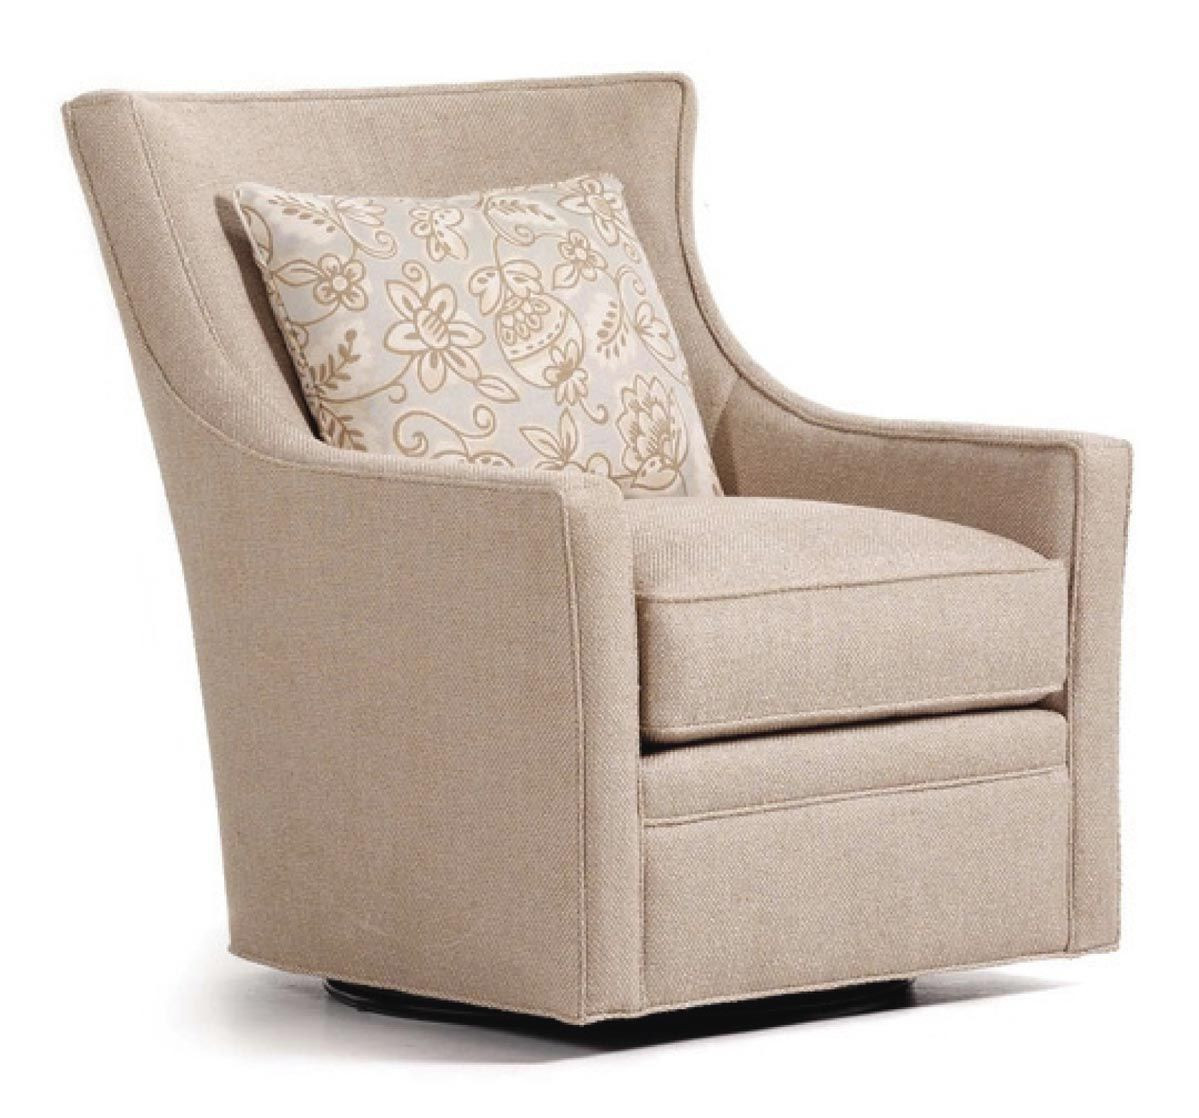 Swivel Chairs For Living Room
 Marshfield Furniture Living Room Penny Swivel Glider